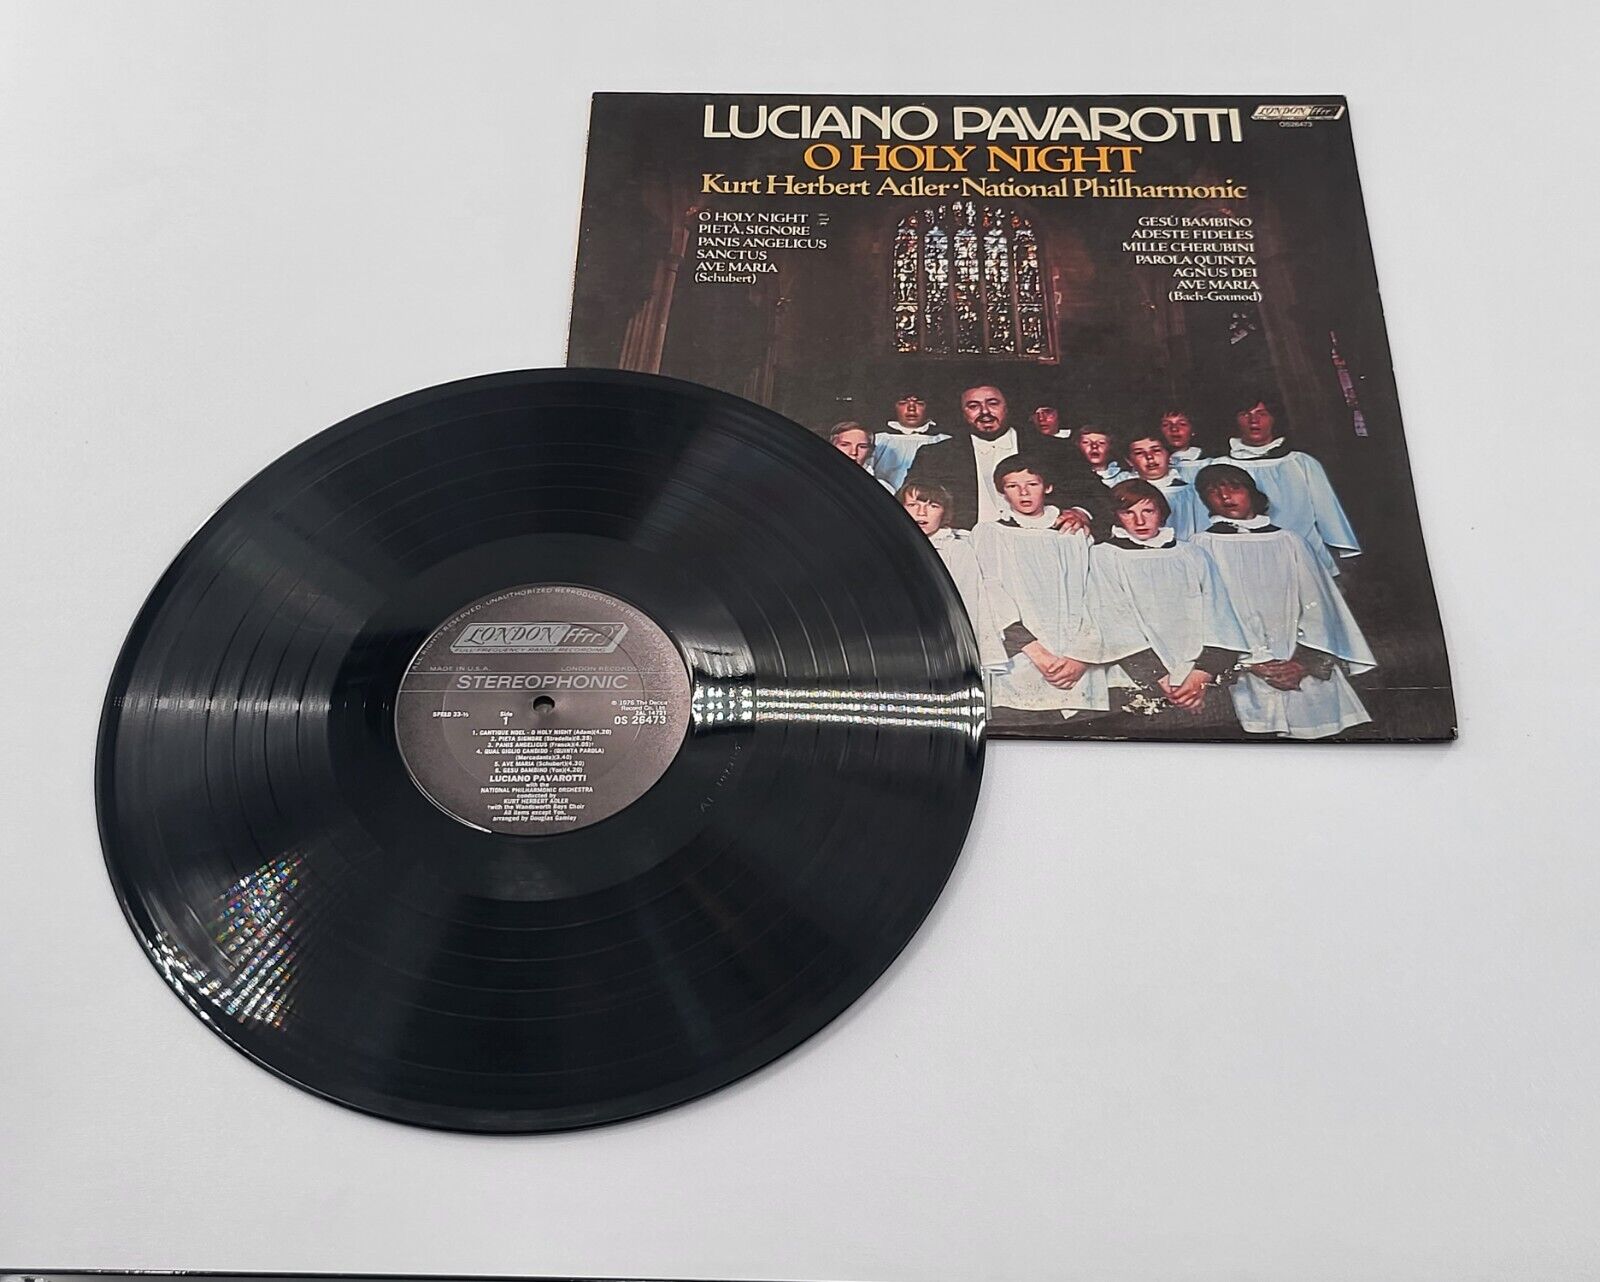 Luciano Pavarotti O Holy Night 1976 Vinyl Record Album LP Kurt Adler